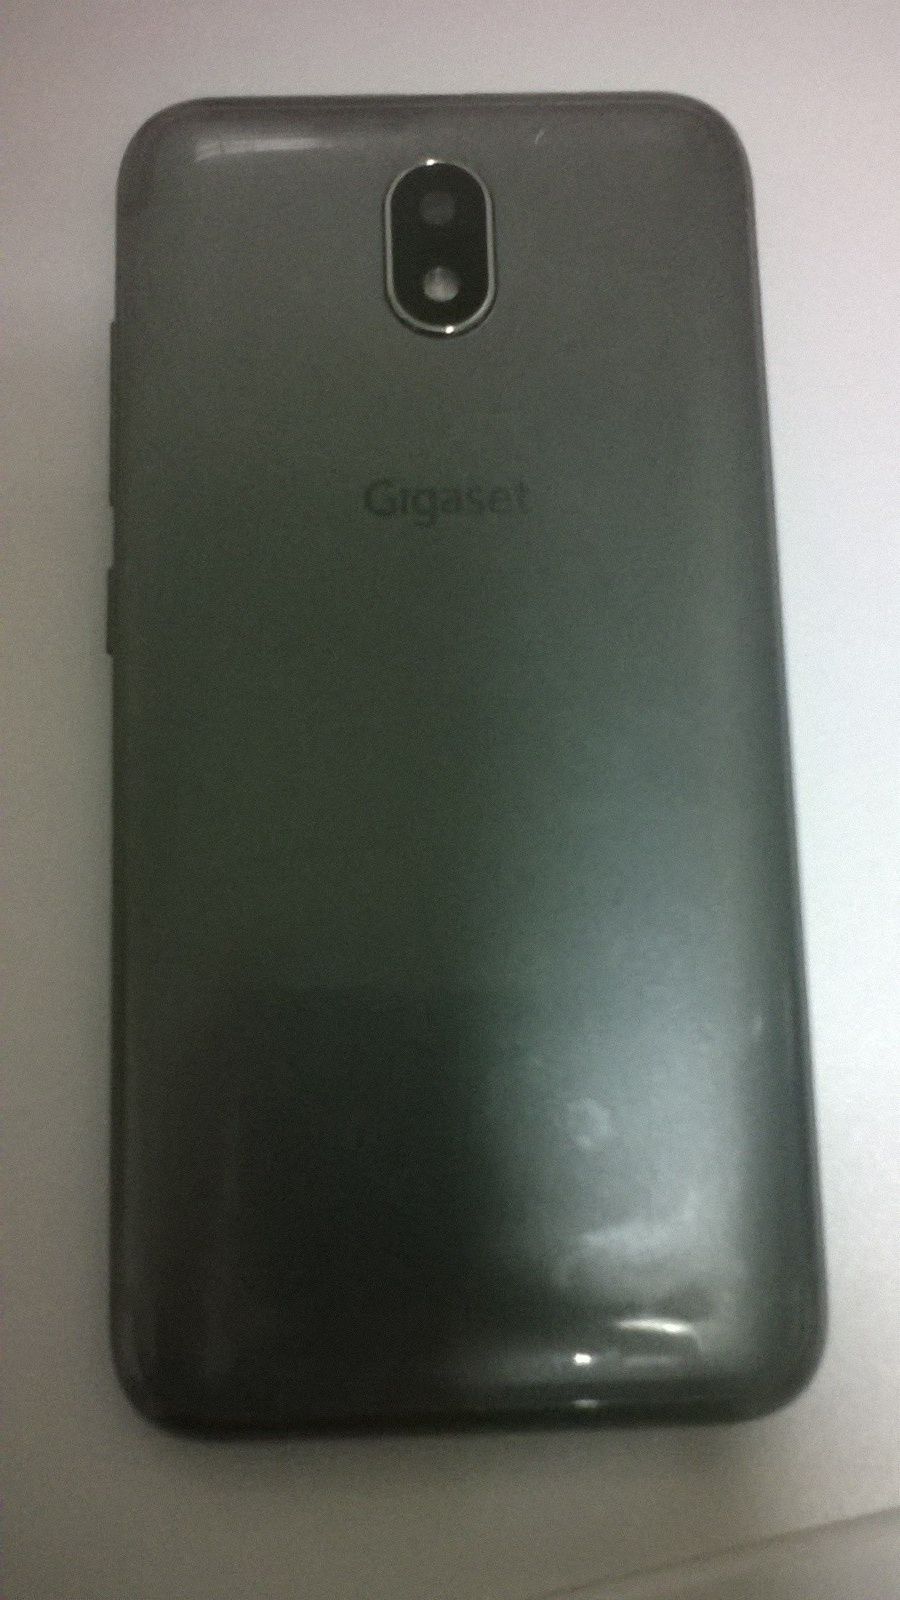 Vând telefonul Gigaset .GS80.